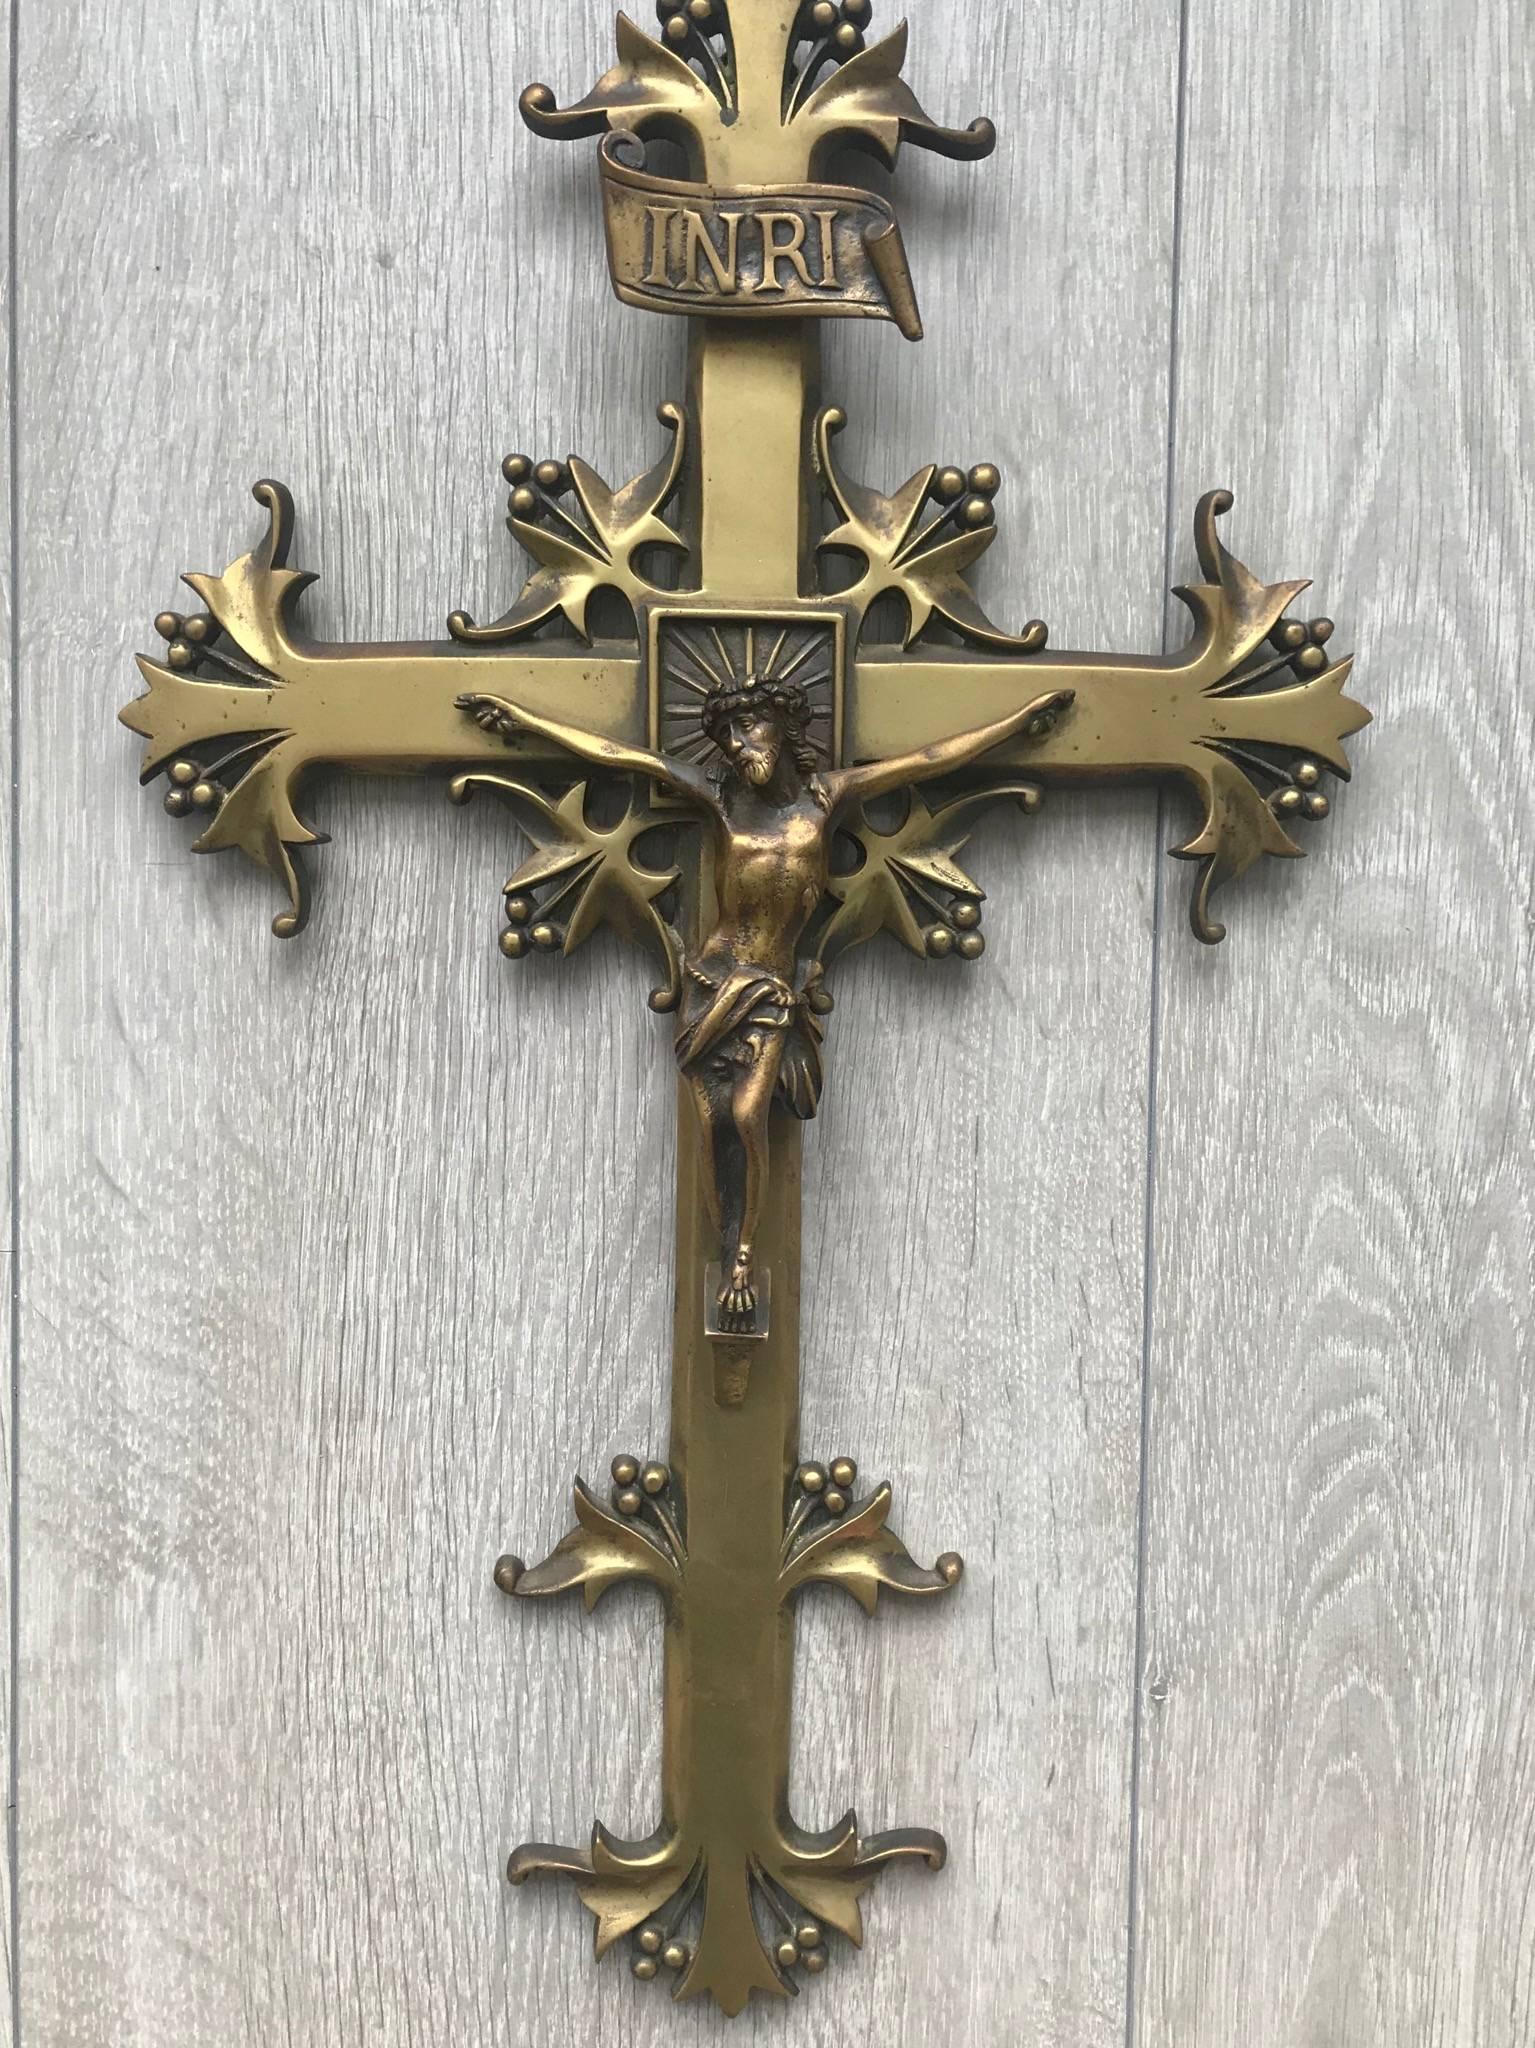 Stunning Jugendstil Era Crucifix Christ on Stylized Gothic Revival Bronze Cross 2